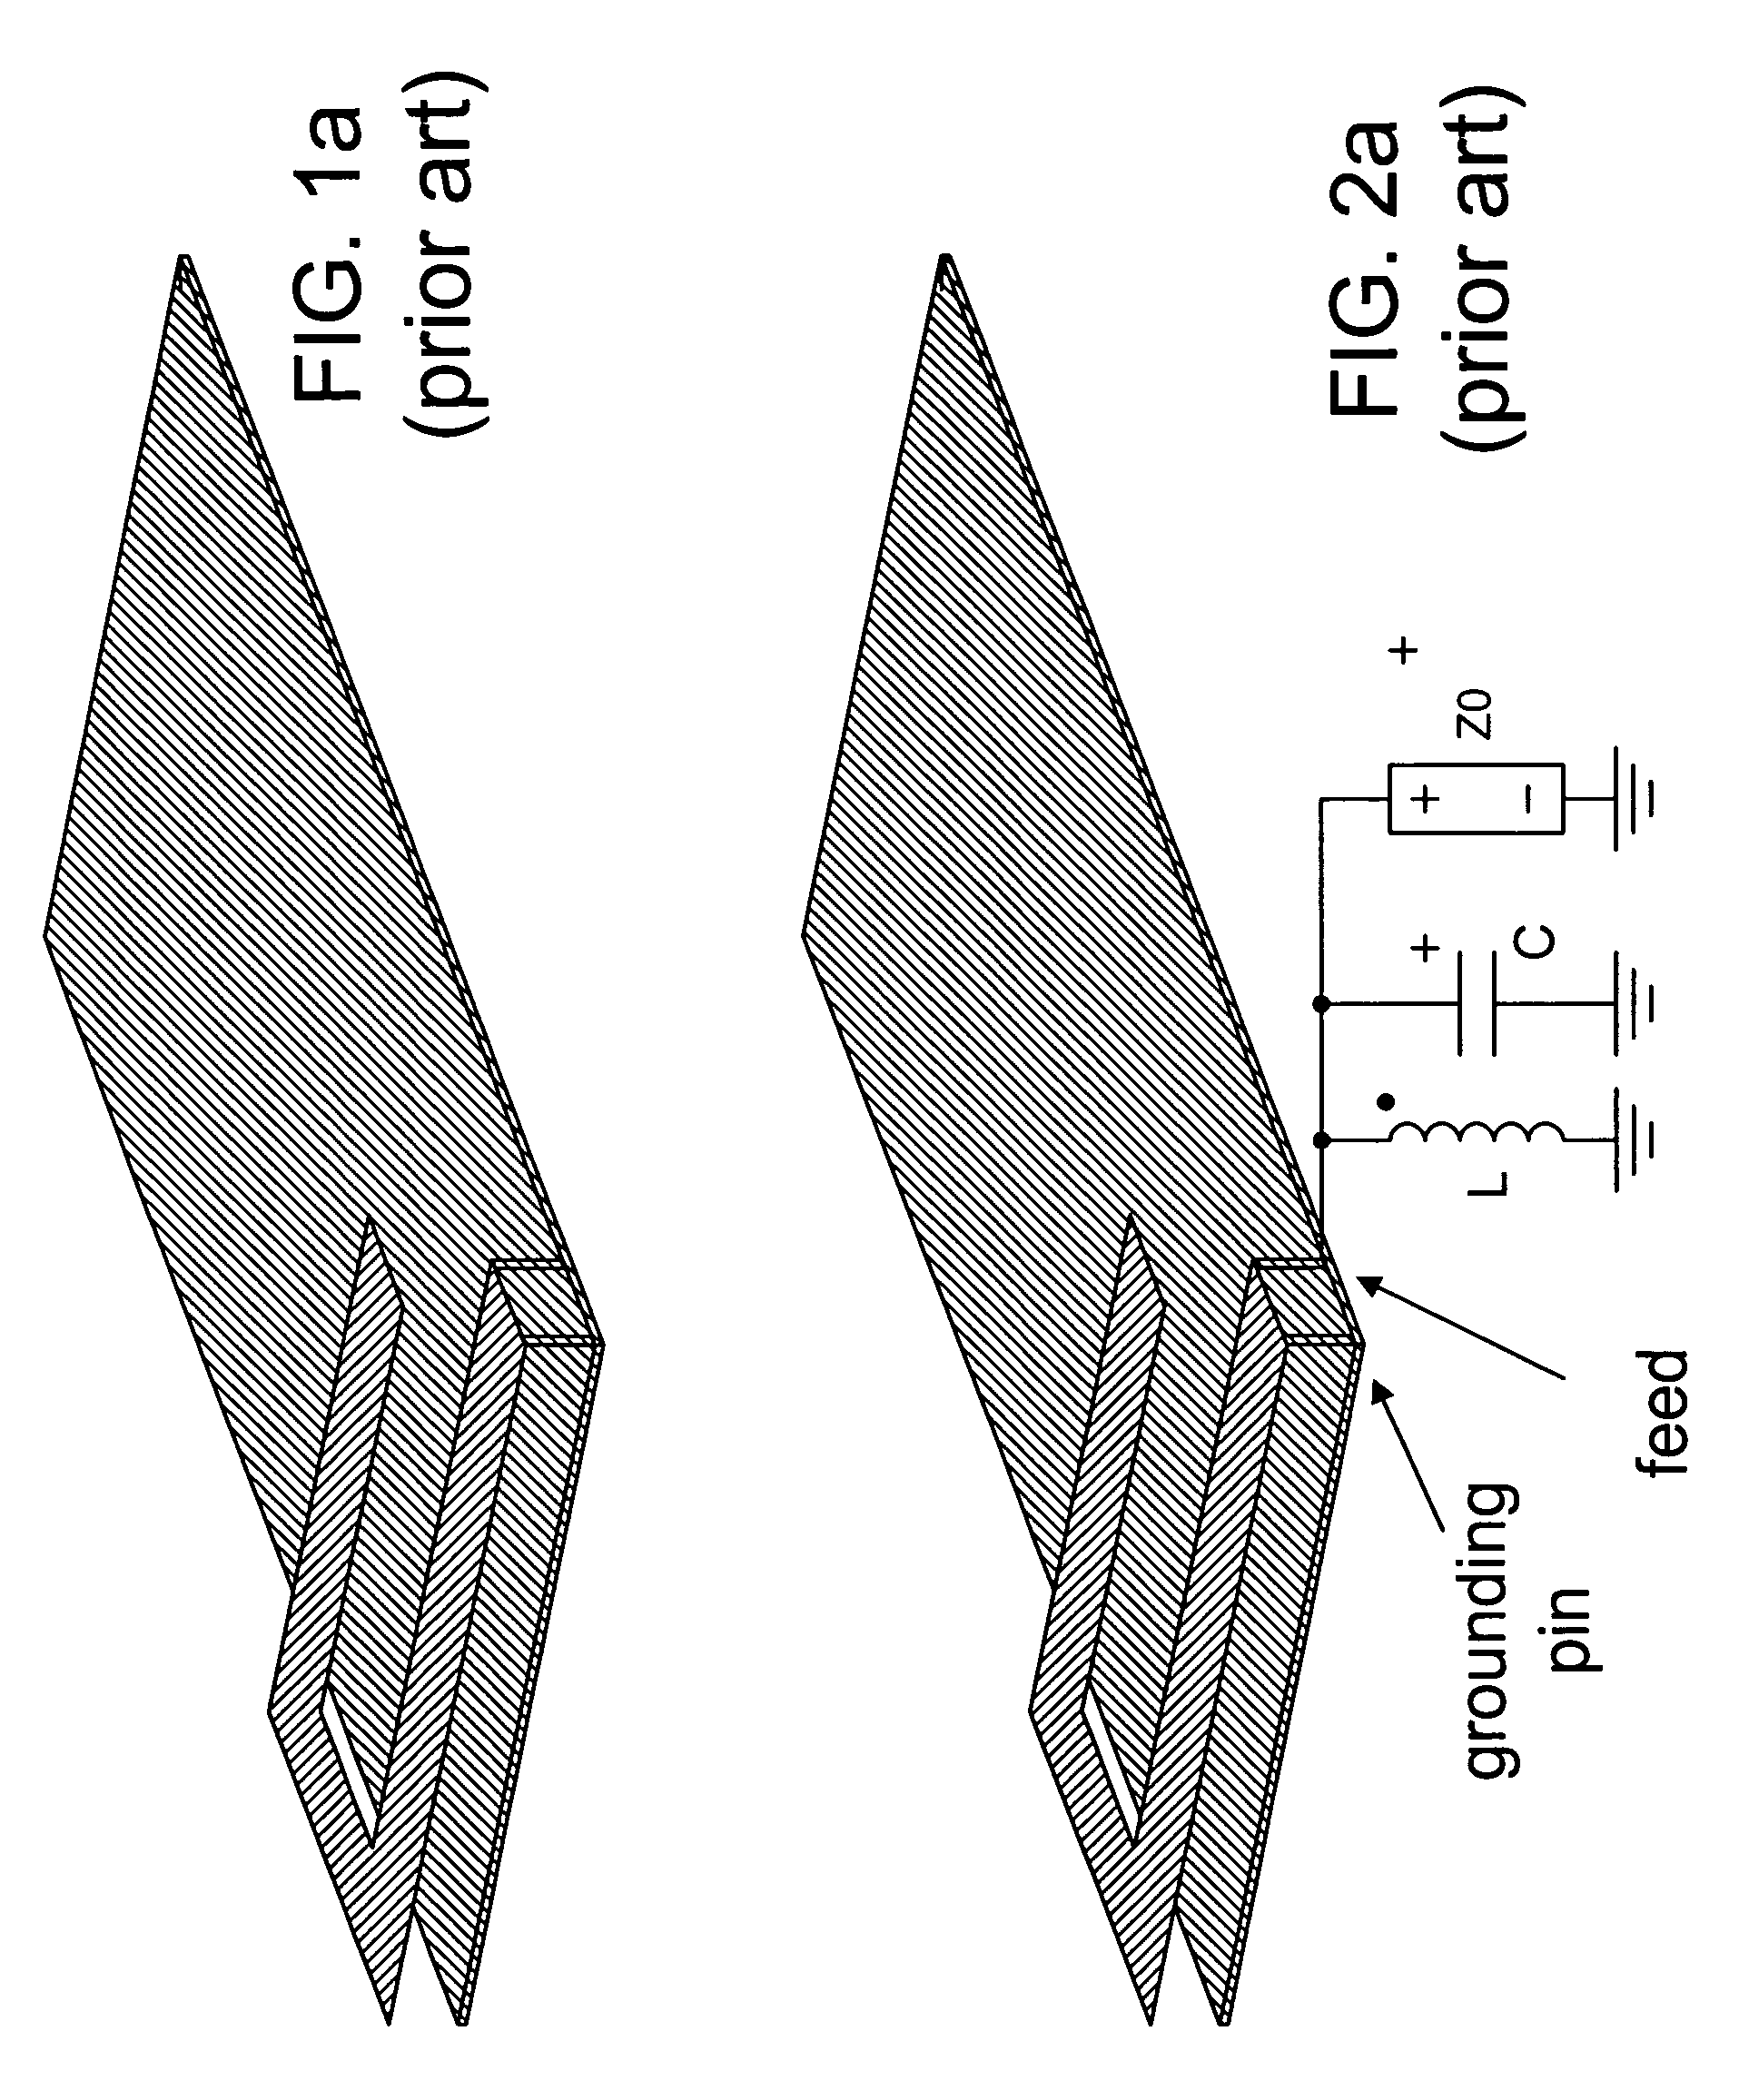 Dual-resonant antenna